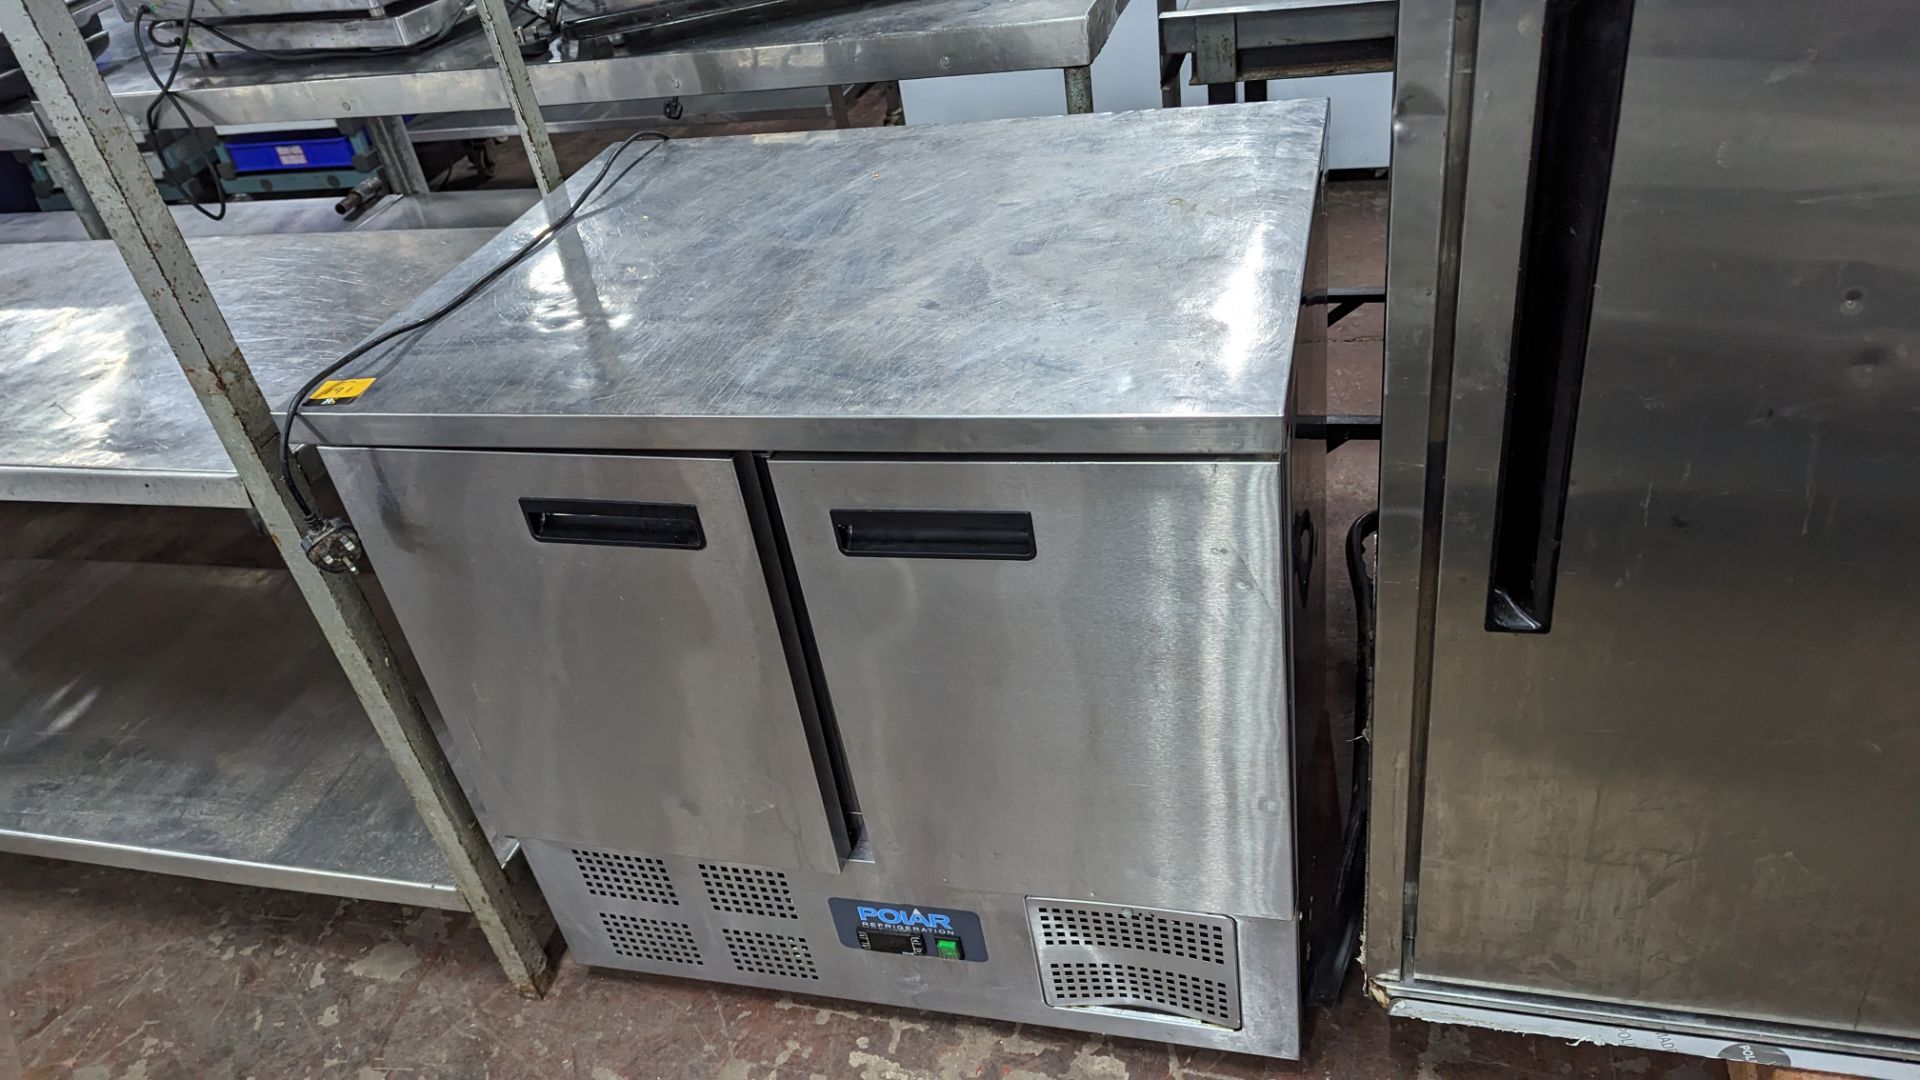 Polar Refrigeration stainless steel twin door refrigerated prep unit